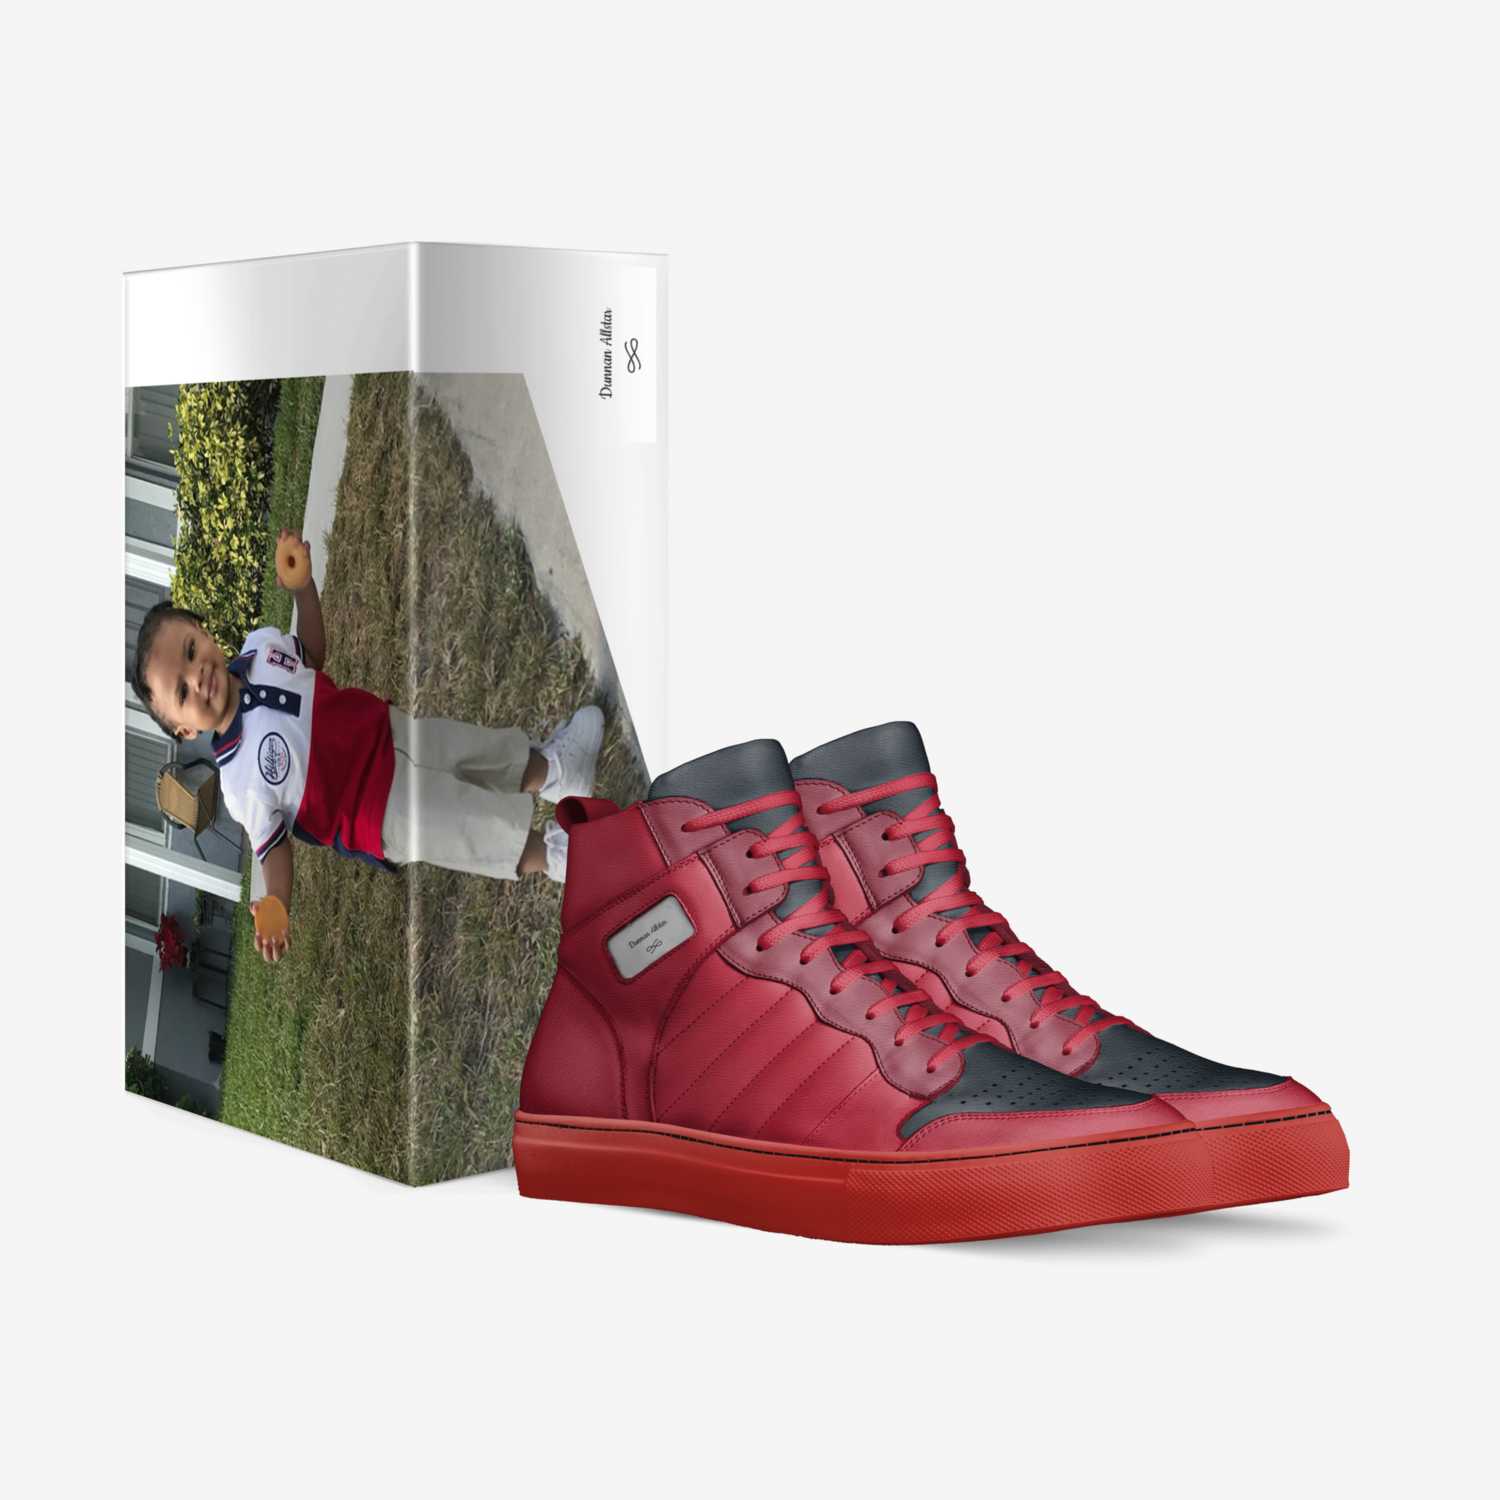 Dunnan Allstar custom made in Italy shoes by Davion Dunn | Box view